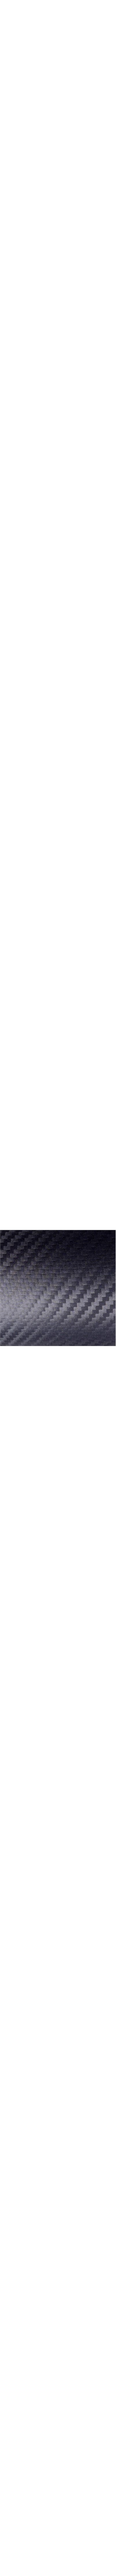 2080-CFS201 Carbon fiber anthracite en 1.524m